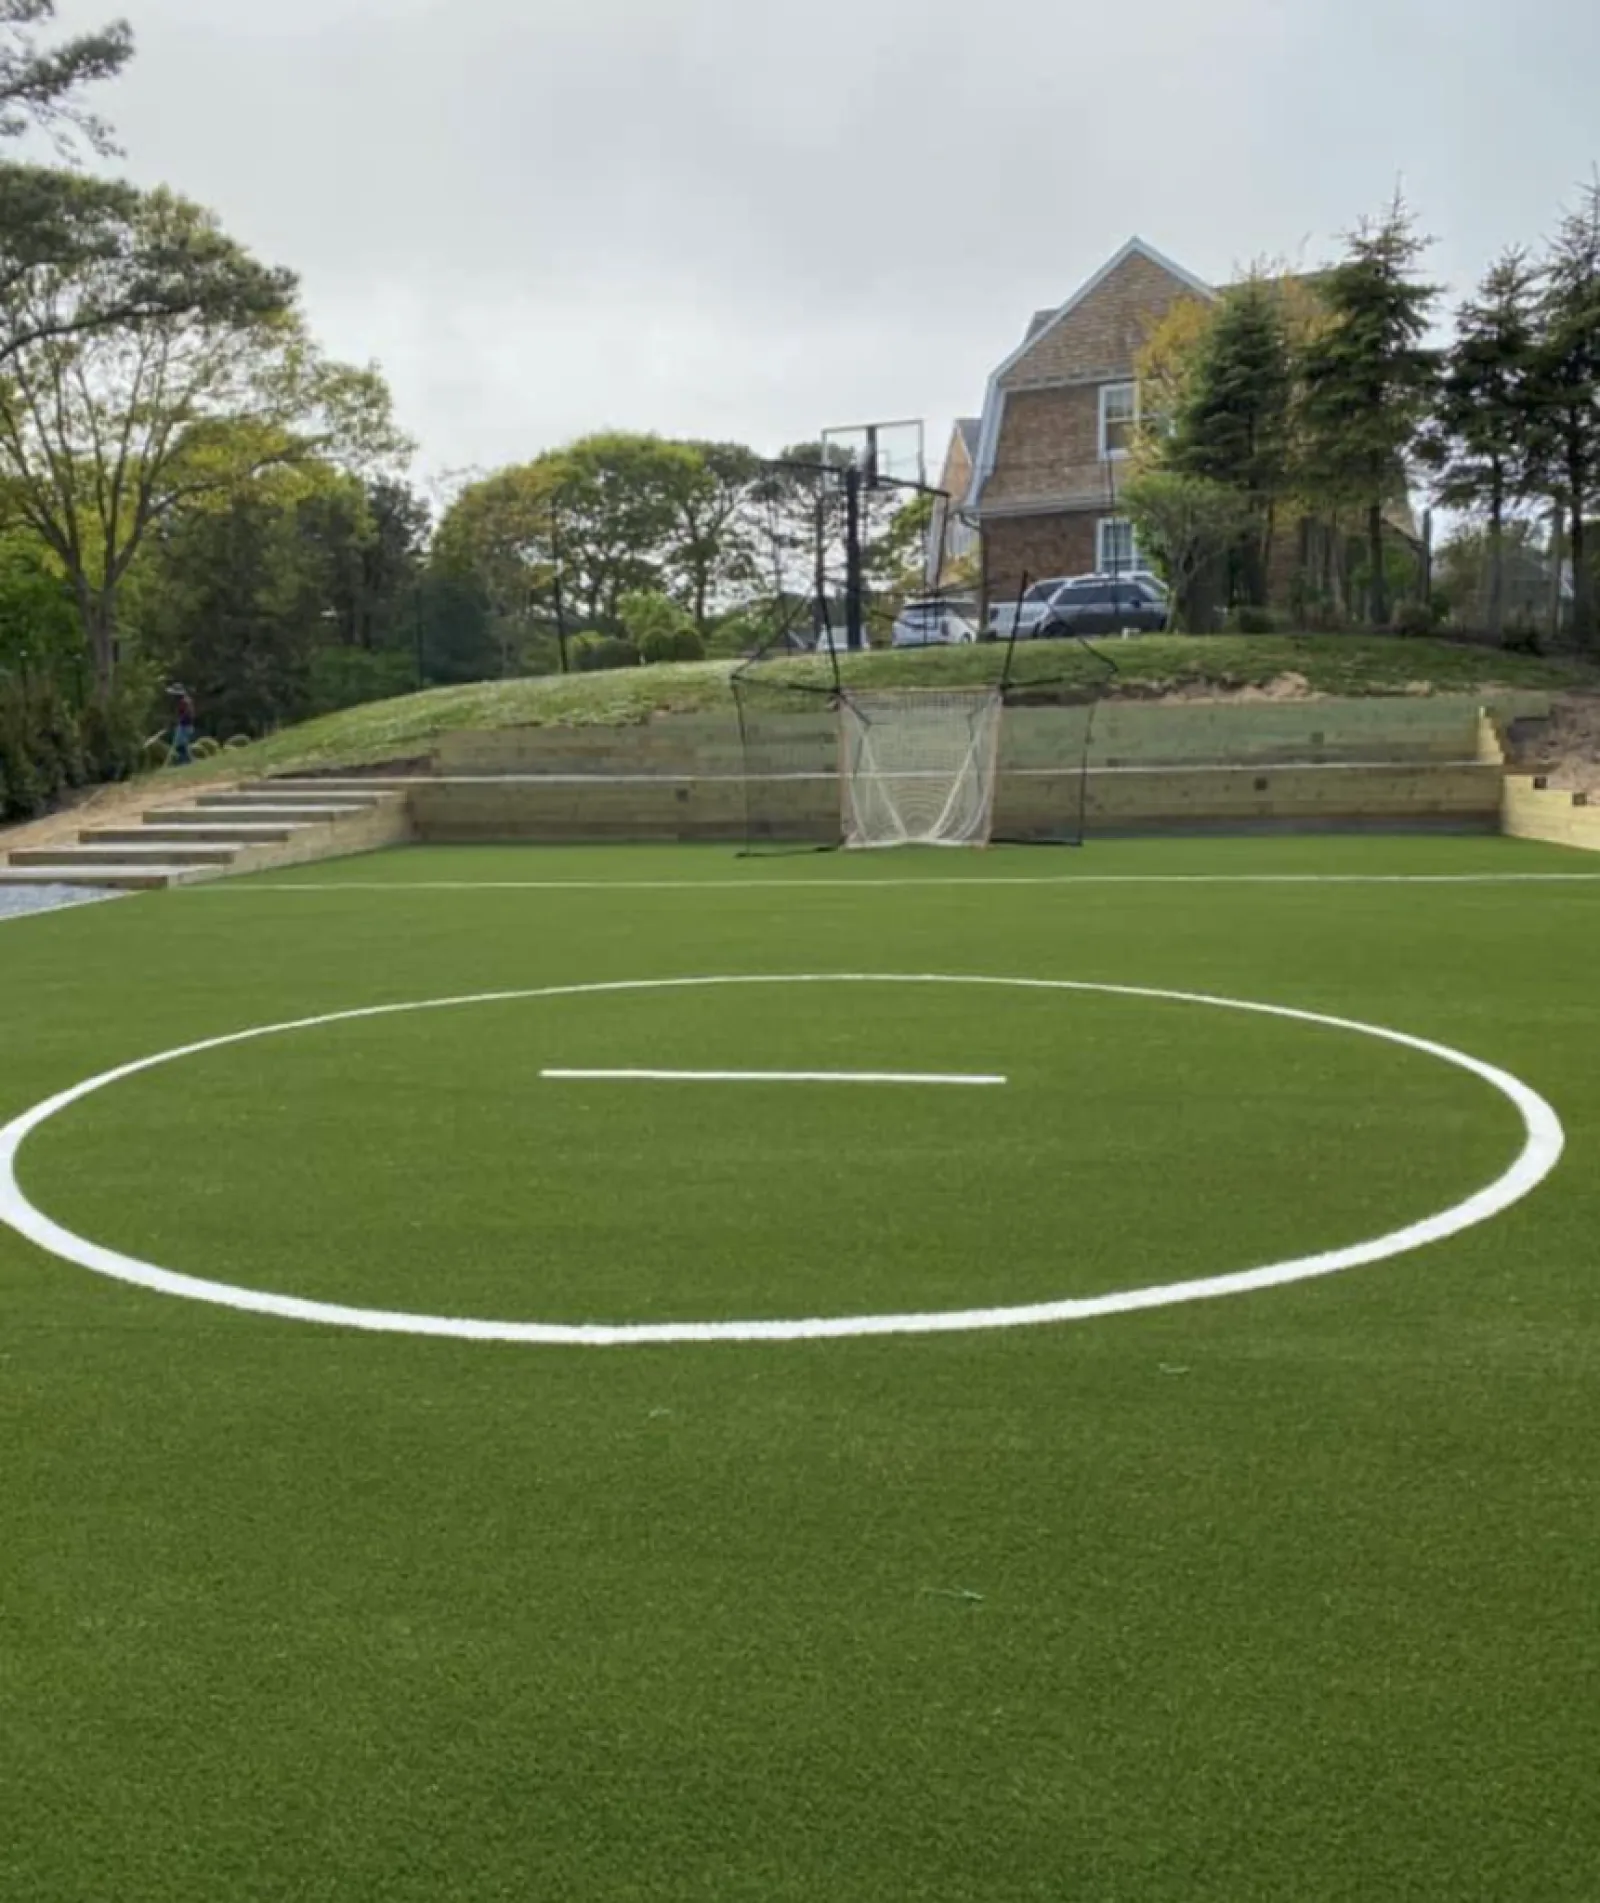 a football field with a goal